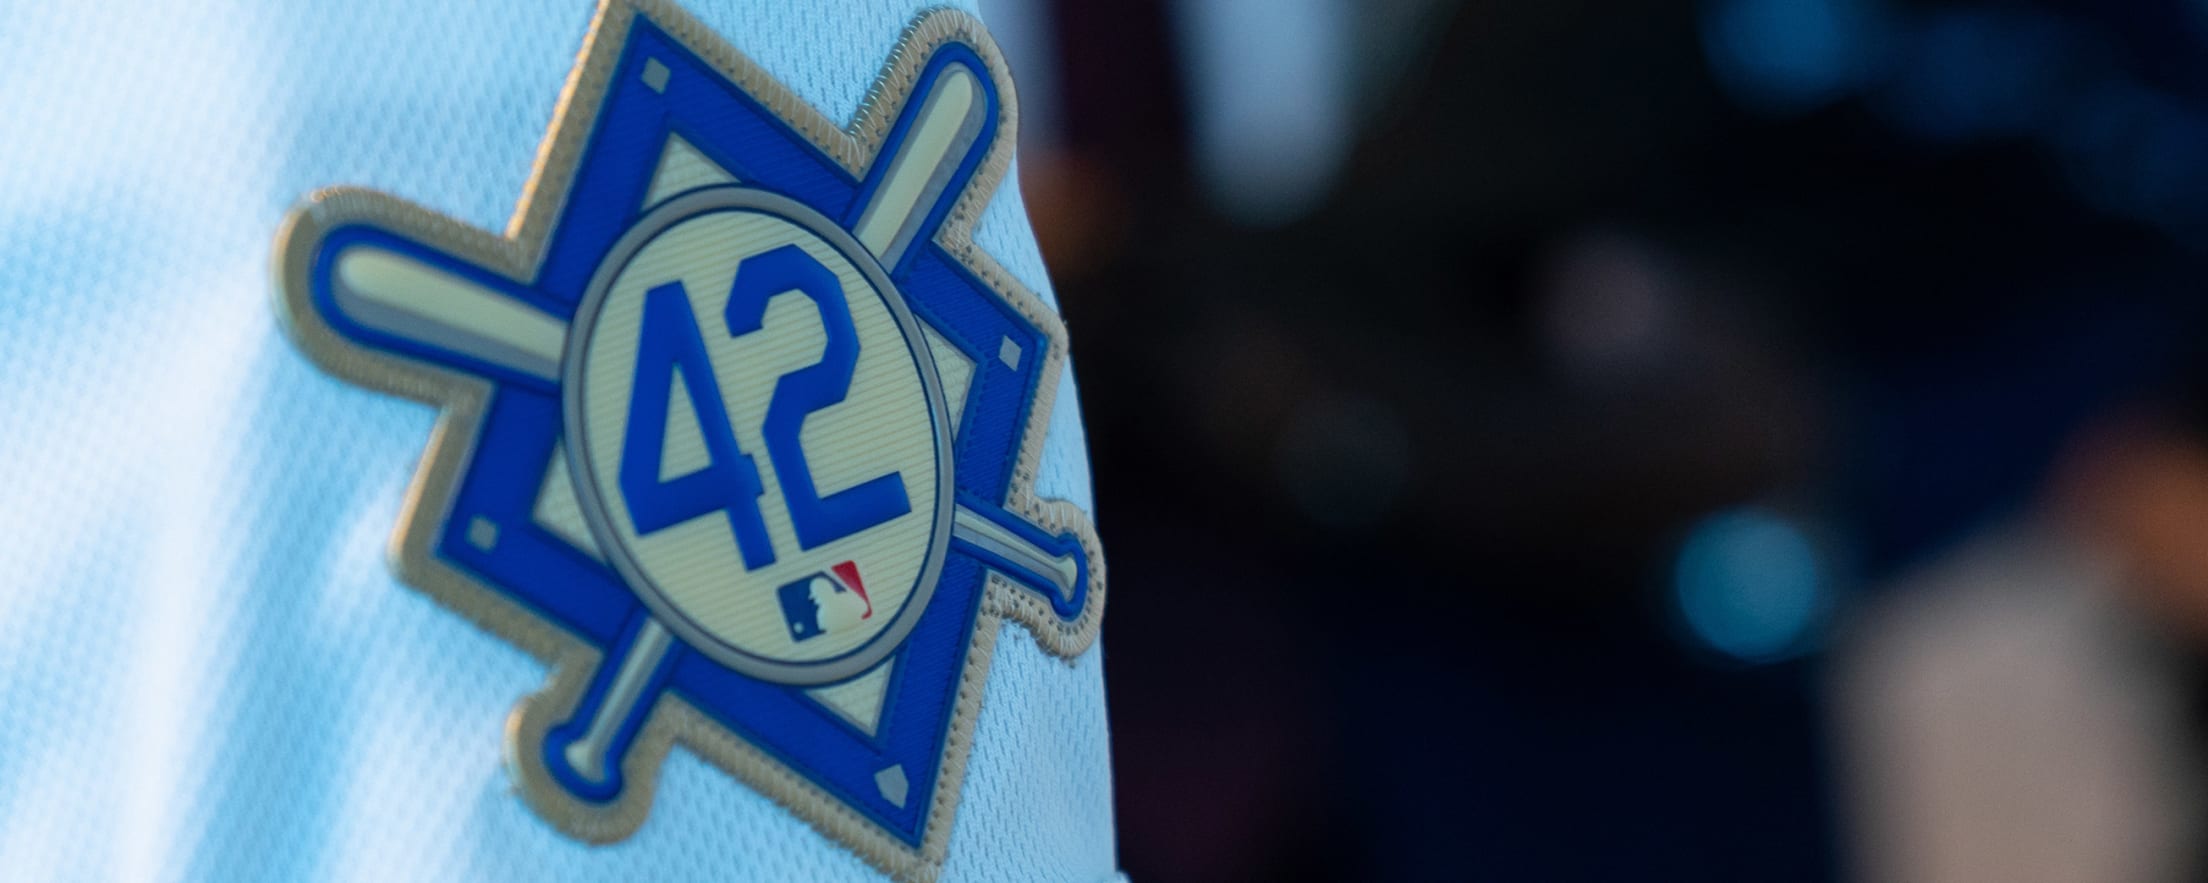 MLB Life on X: .@MookieBetts' Jordan 5 cleats for Jackie Robinson Day  #Jackie42  / X